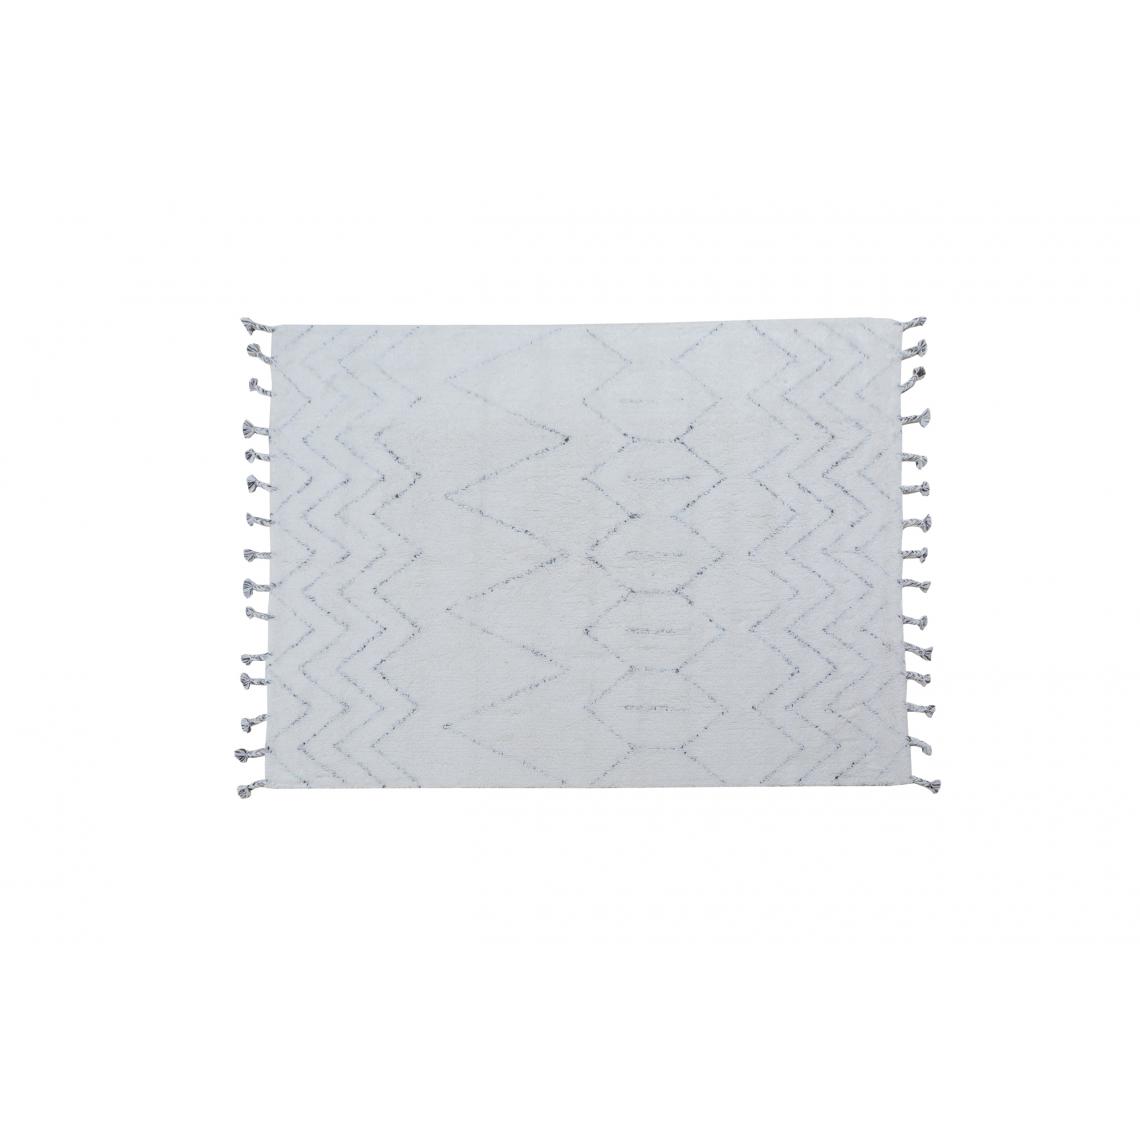 Alter - Tapis Californie moderne, style kilim, 100% coton, ivoire, 150x80cm - Tapis